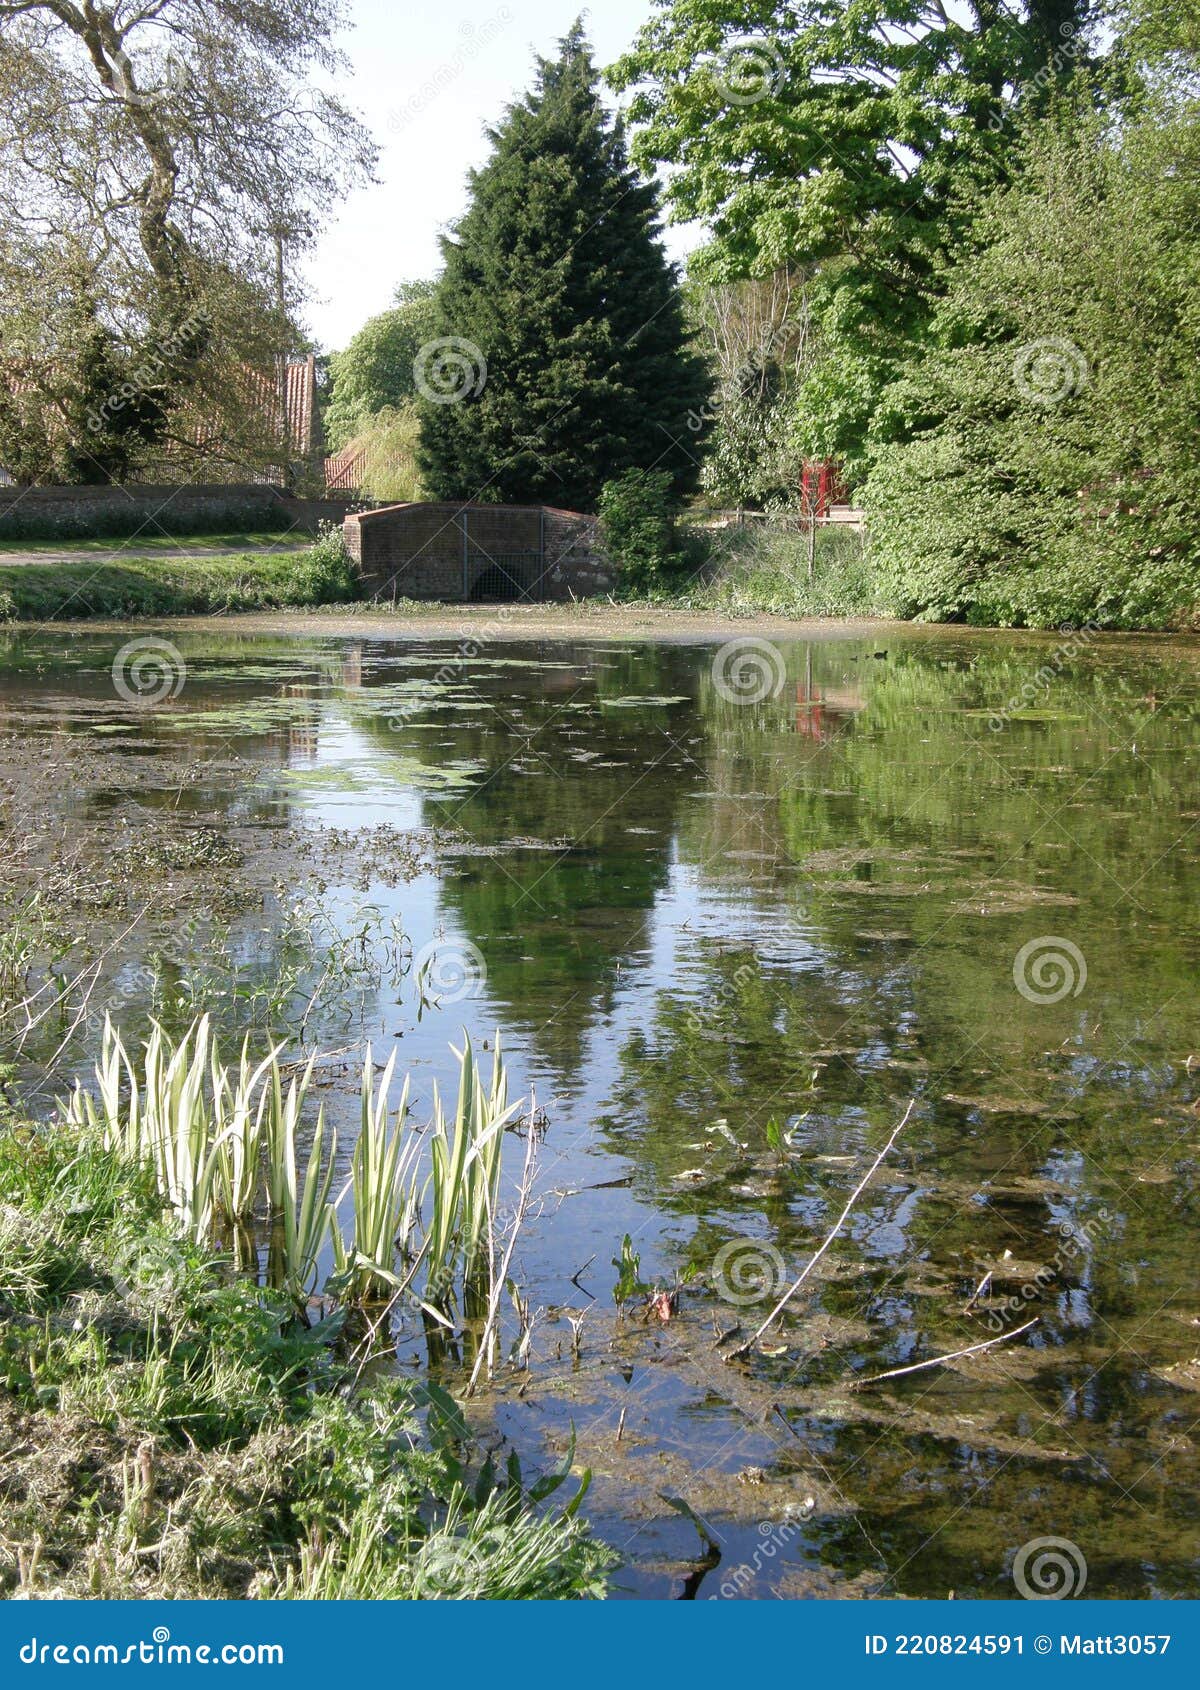 a peaceful duck pond by a bridge